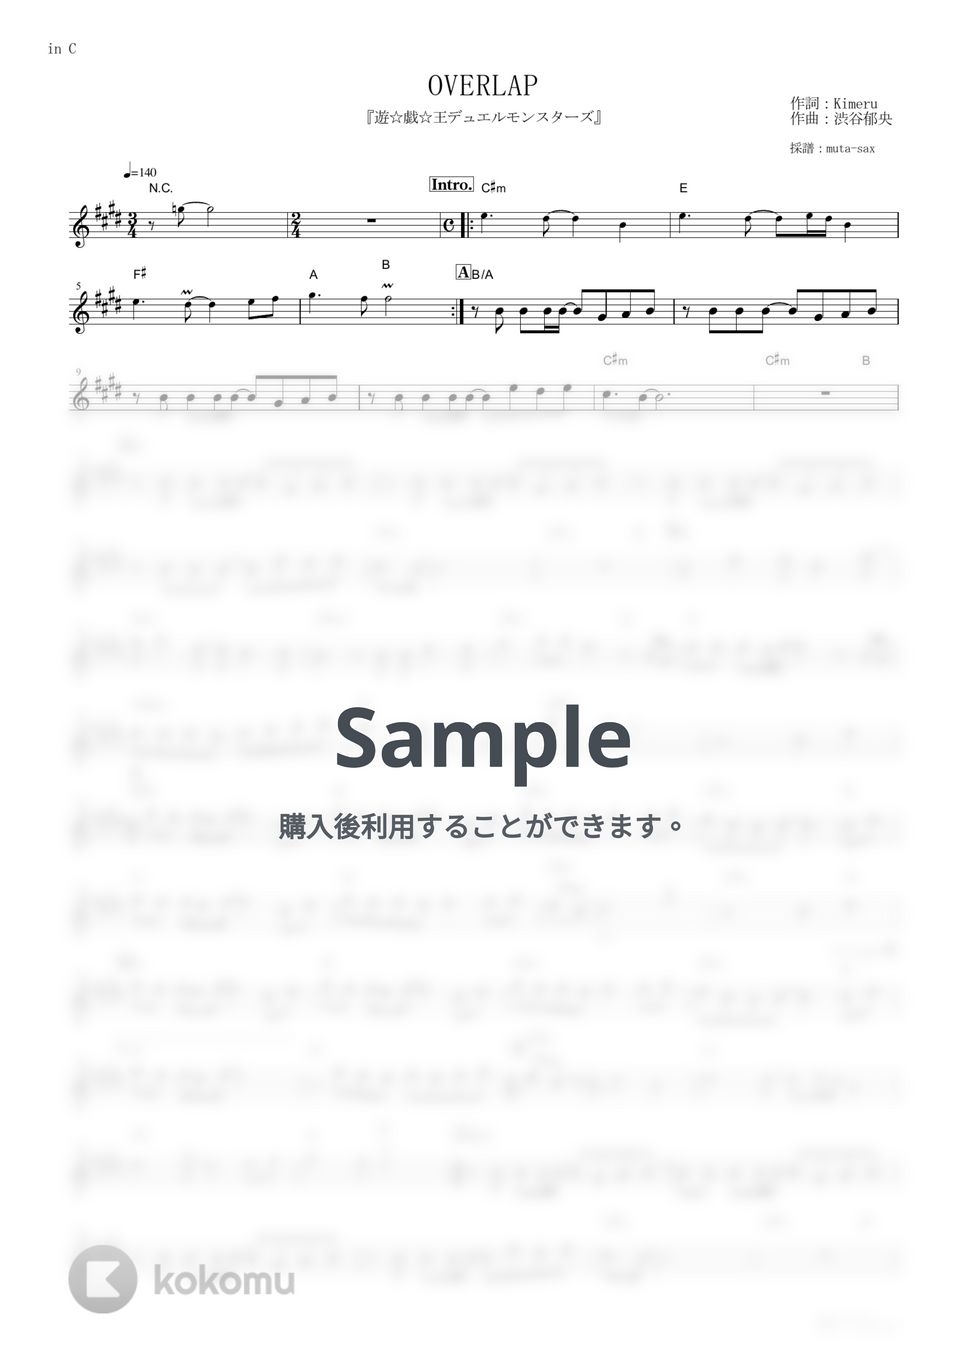 Kimeru - OVERLAP (『遊☆戯☆王デュエルモンスターズ』 / in C) by muta-sax